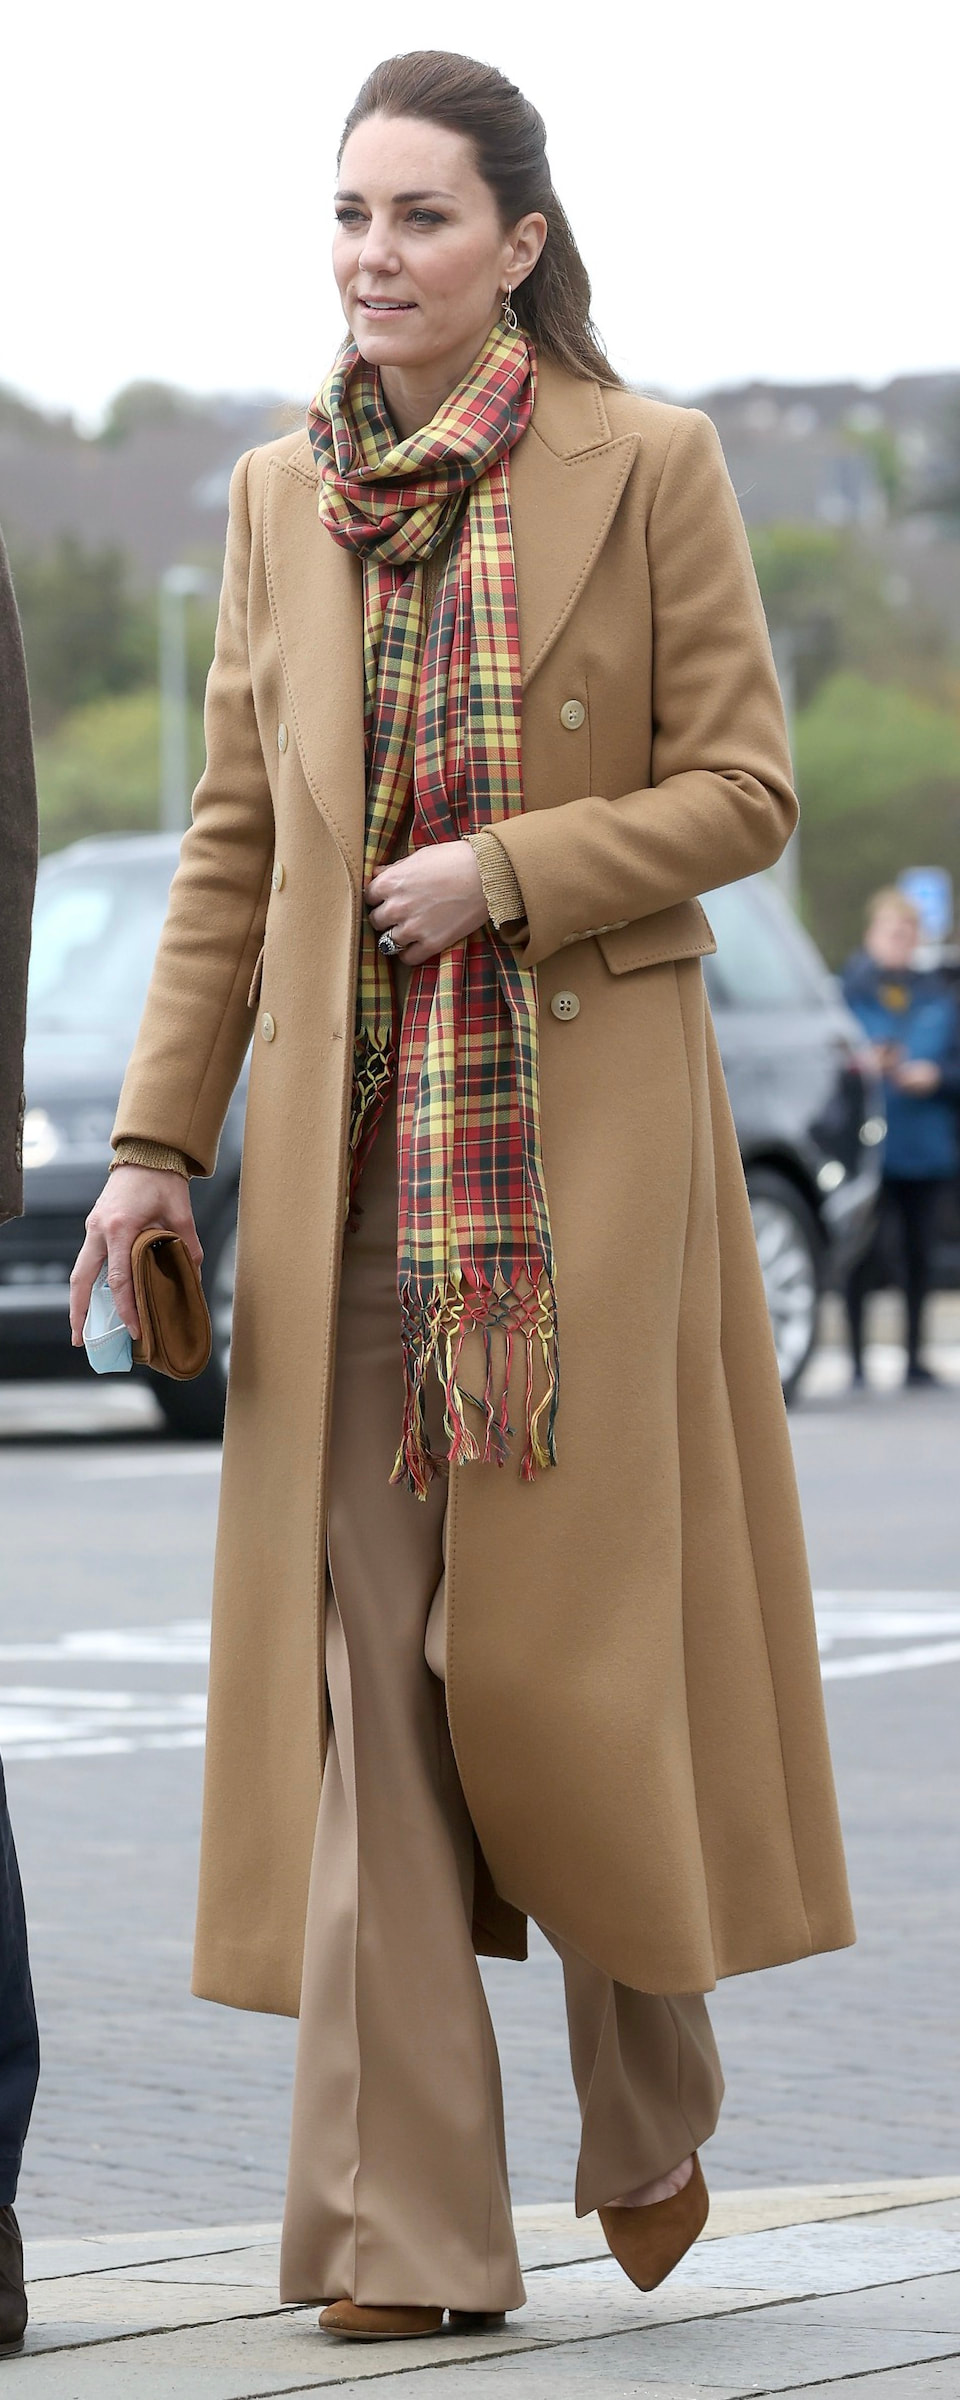 Emmy London Natasha Saddle suede clutch as seen on Kate Middleton, The Duchess of Cambridge.